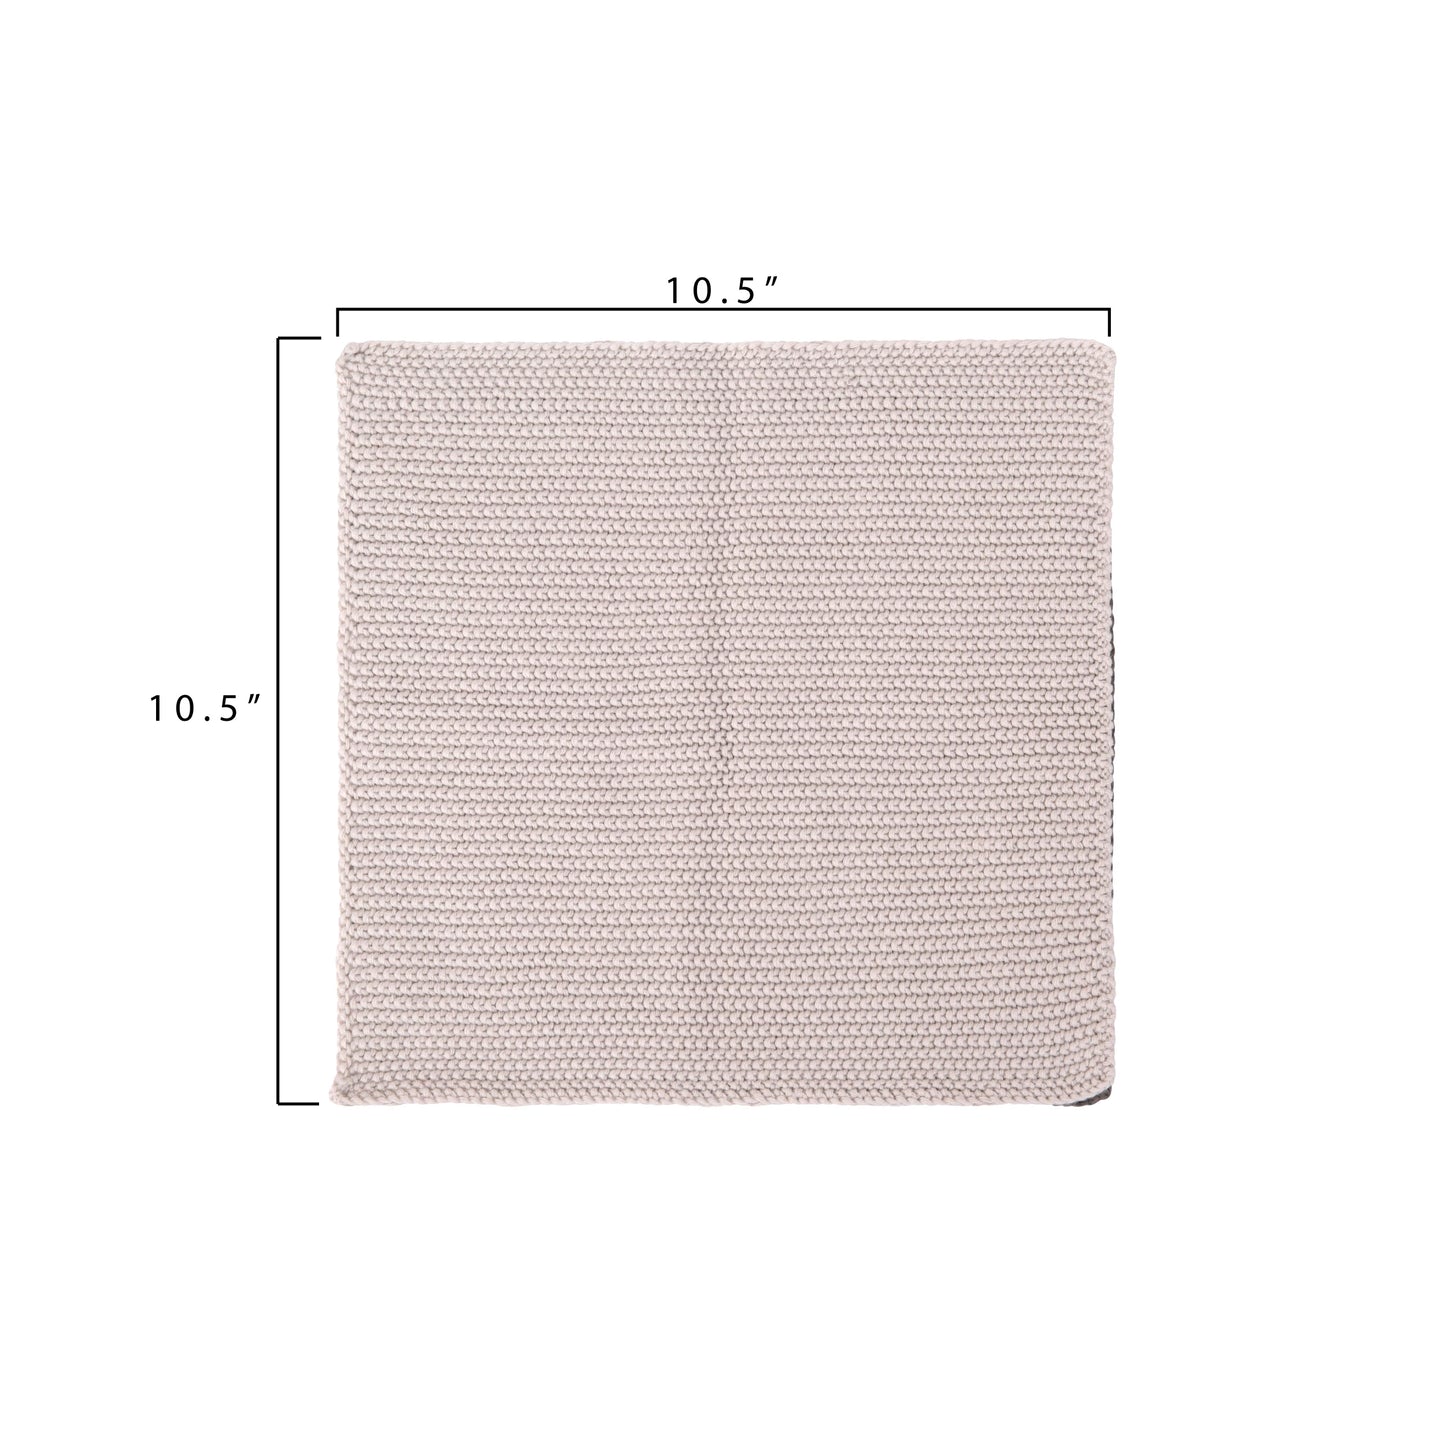 Cotton Knit Dish Cloths Grey/Charcoal